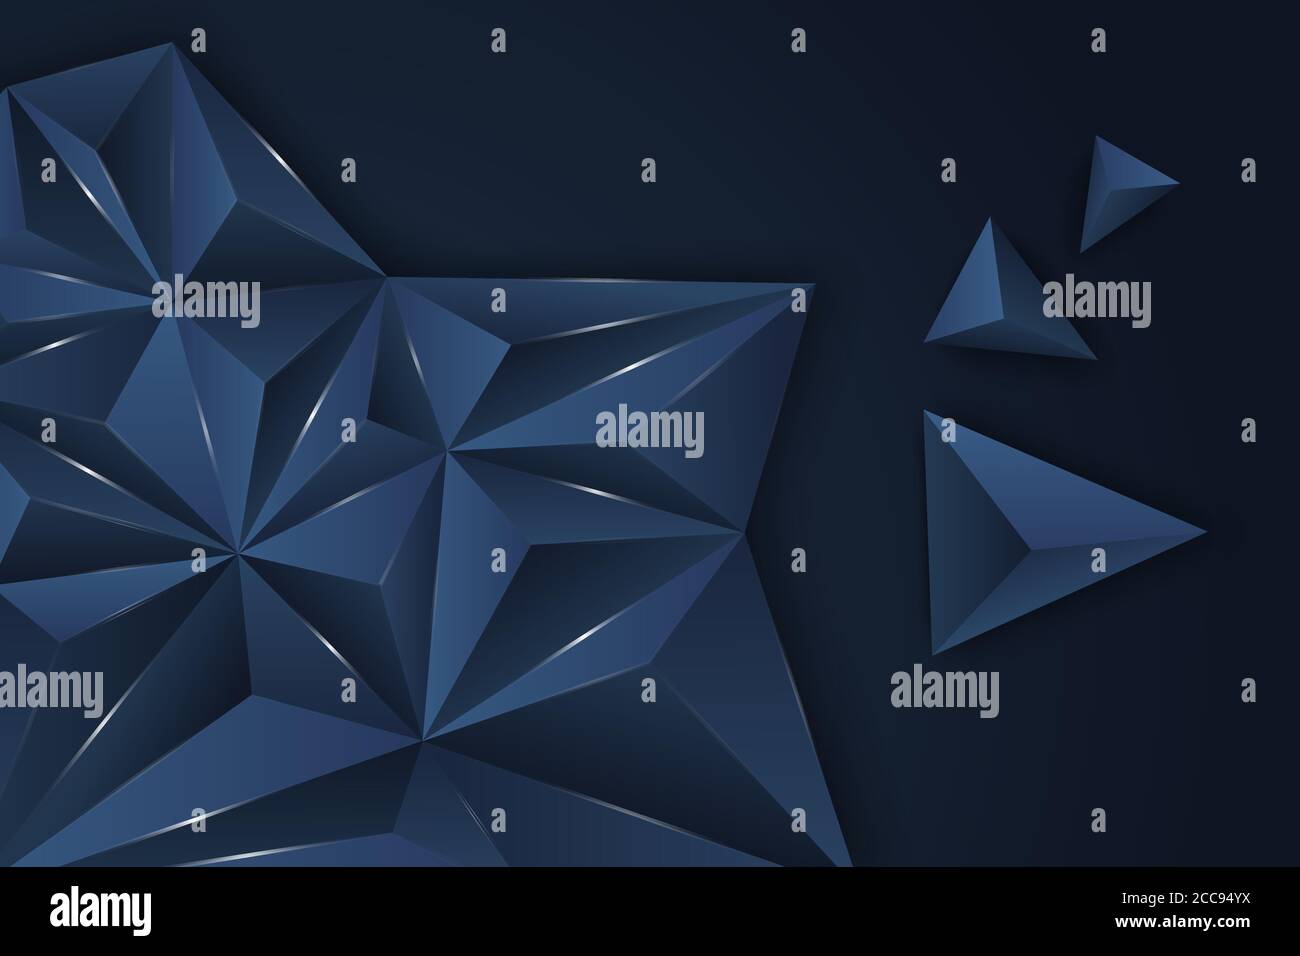 https://c8.alamy.com/comp/2CC94YX/triangle-background-of-blue-with-dark-spacepolygonal-metal-modern-design-2CC94YX.jpg